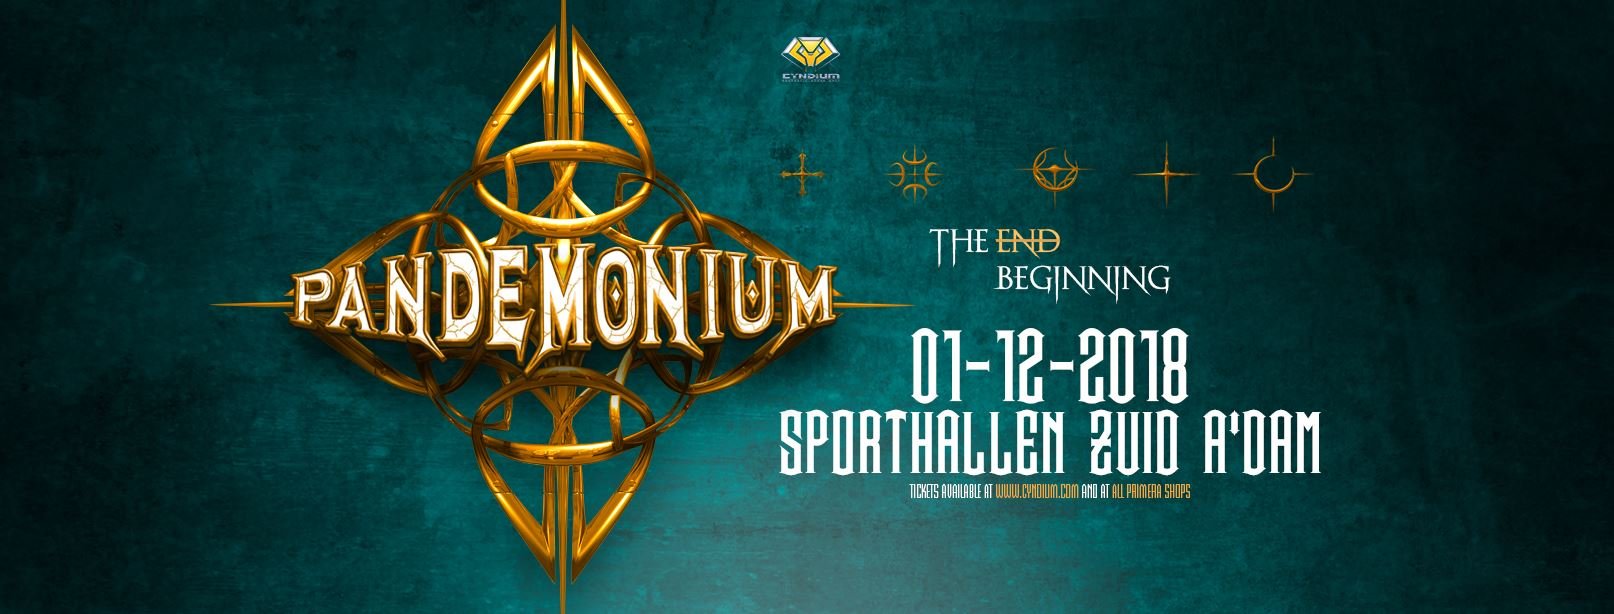 Pandemonium 2018: The End/Beginning 